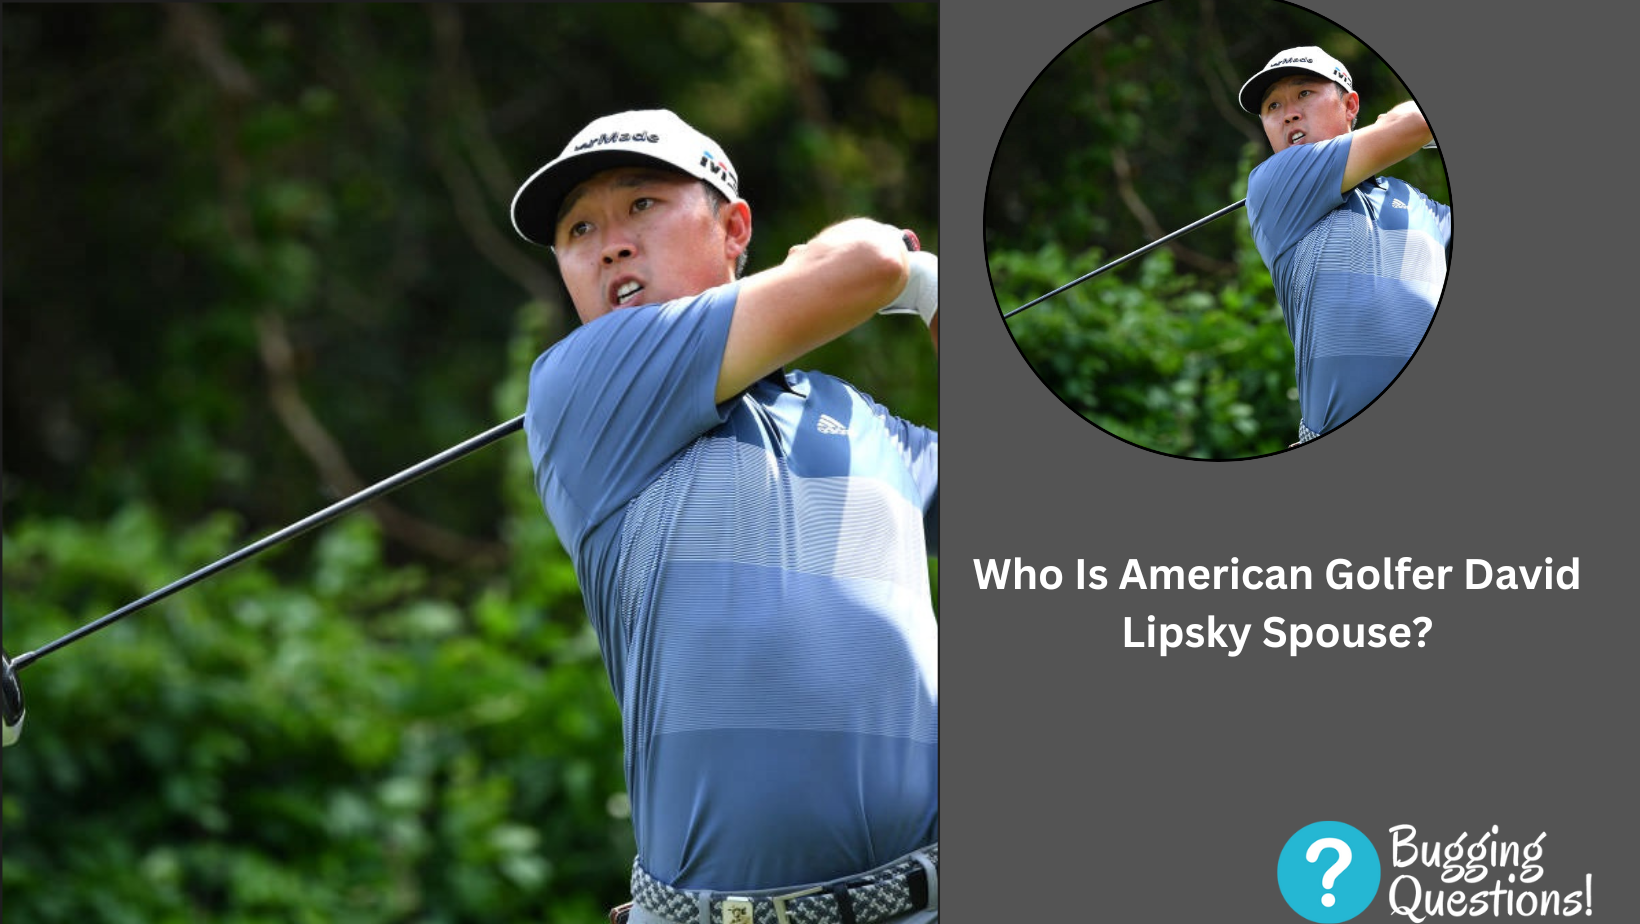 Who Is American Golfer David Lipsky Spouse?